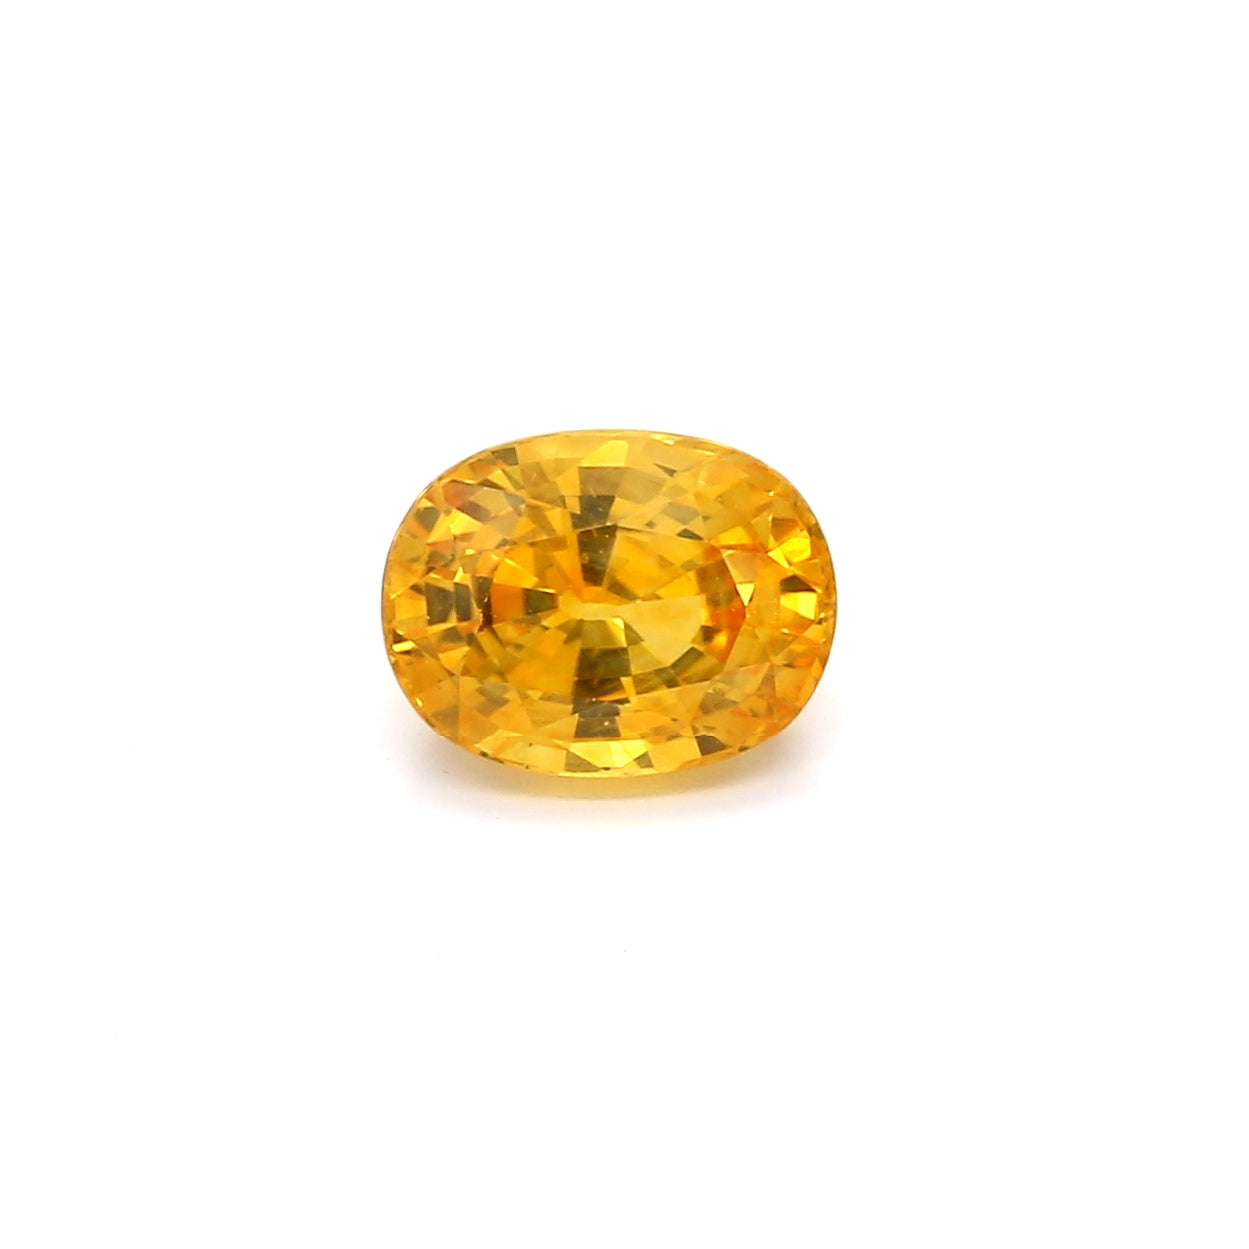 1.94ct Yellow, Oval Sapphire, Heated, Sri Lanka - 7.90 x 6.10 x 4.58mm